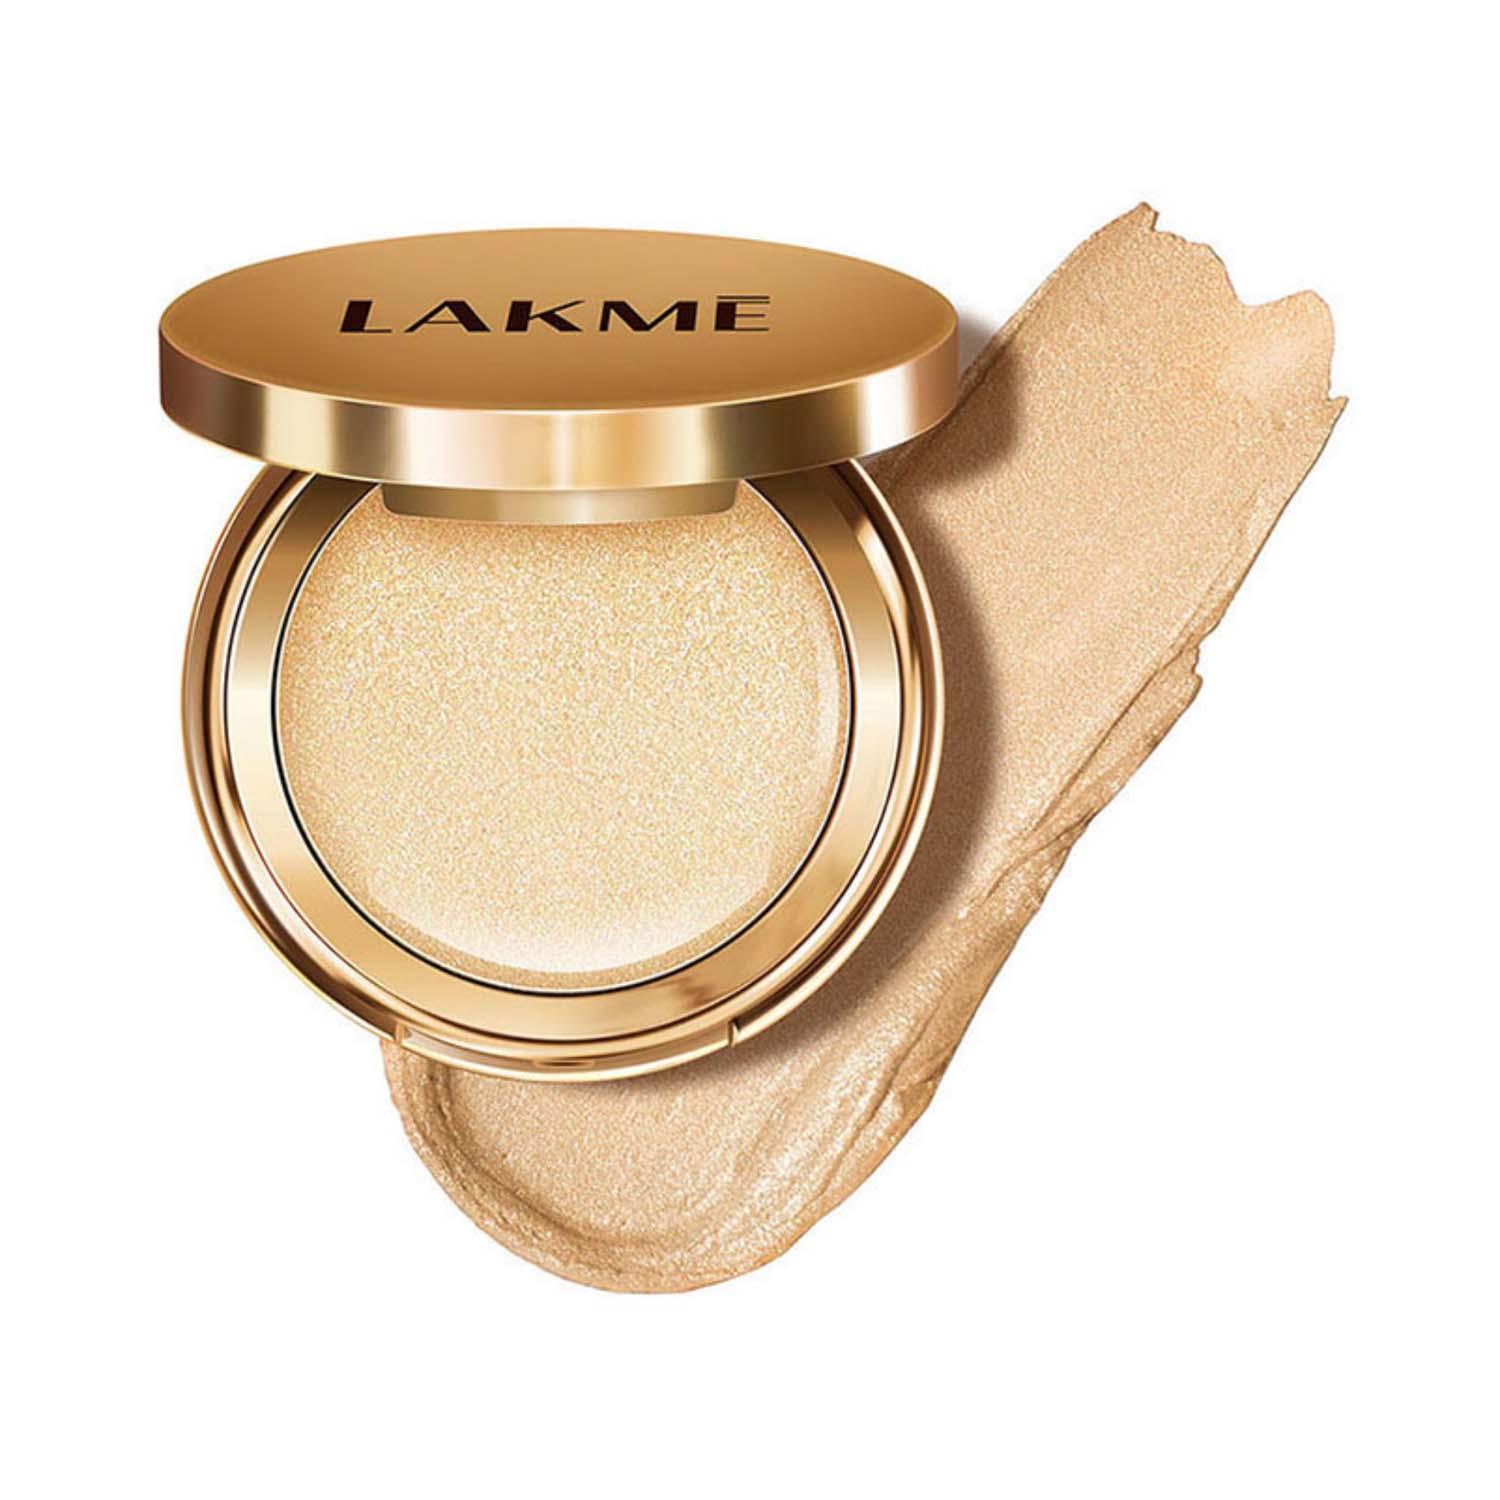 Lakme | Lakme 9 To 5 Powerplay Velvet Crème Highlighter - Sultry Gold (9g)